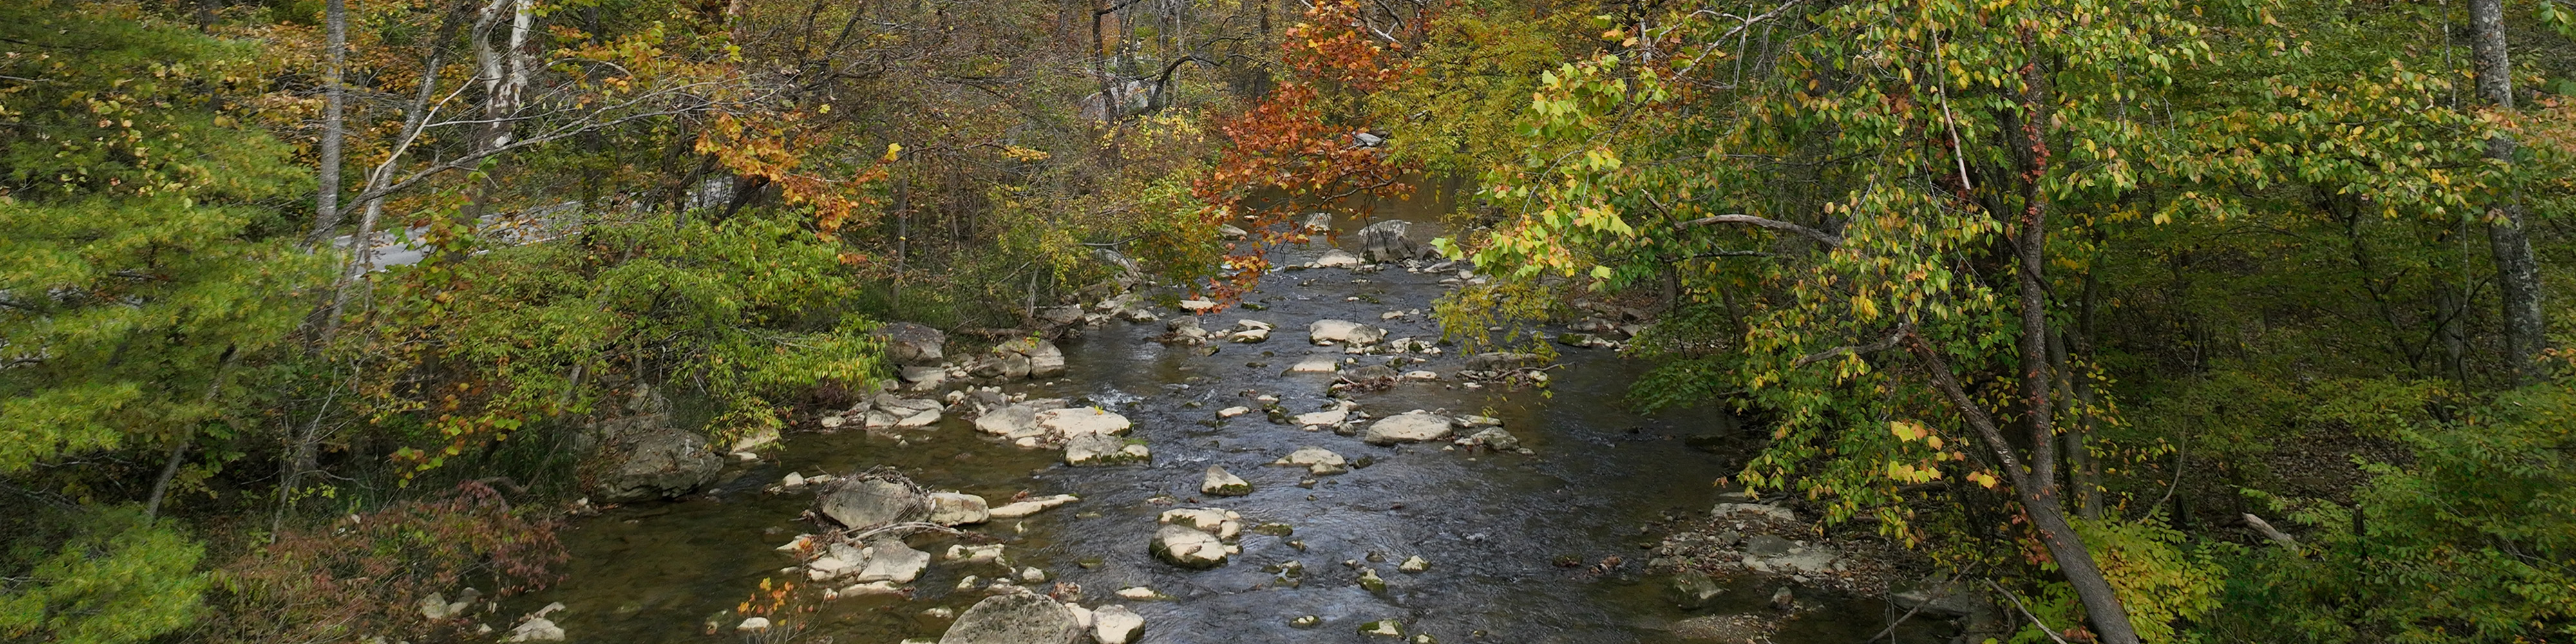 North Fork creek